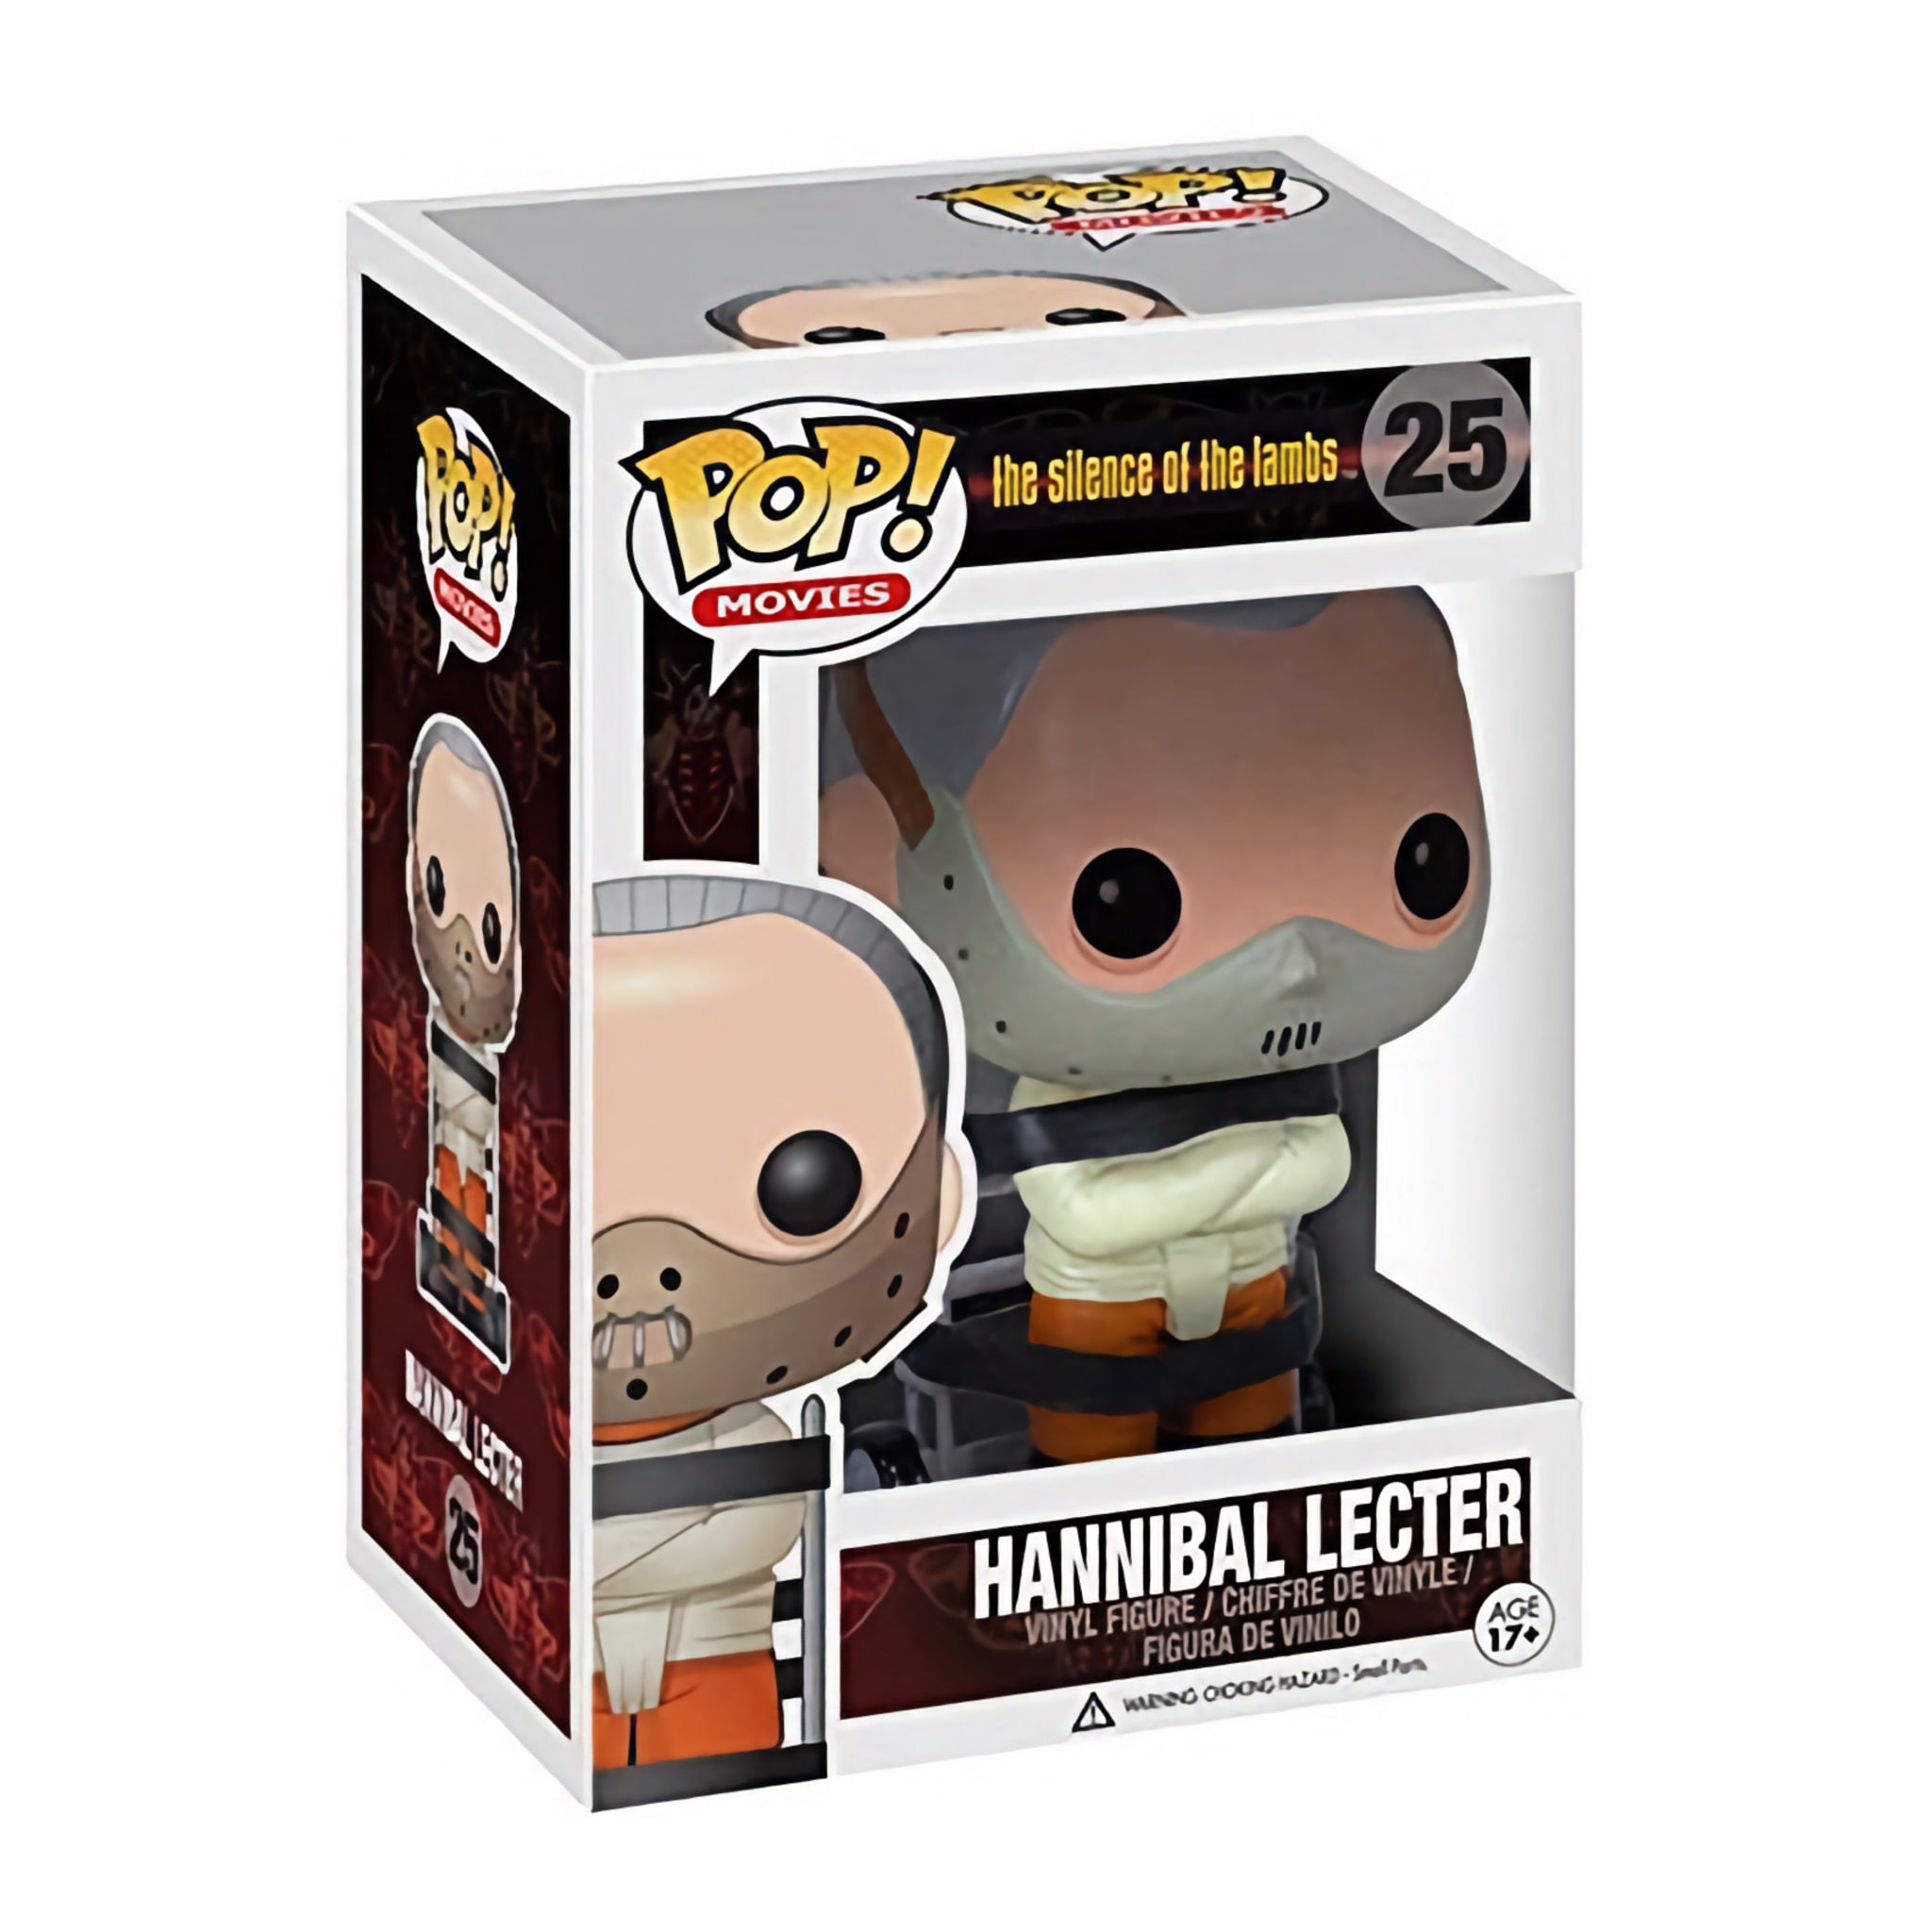 Hannibal Lecter Funko Pop!